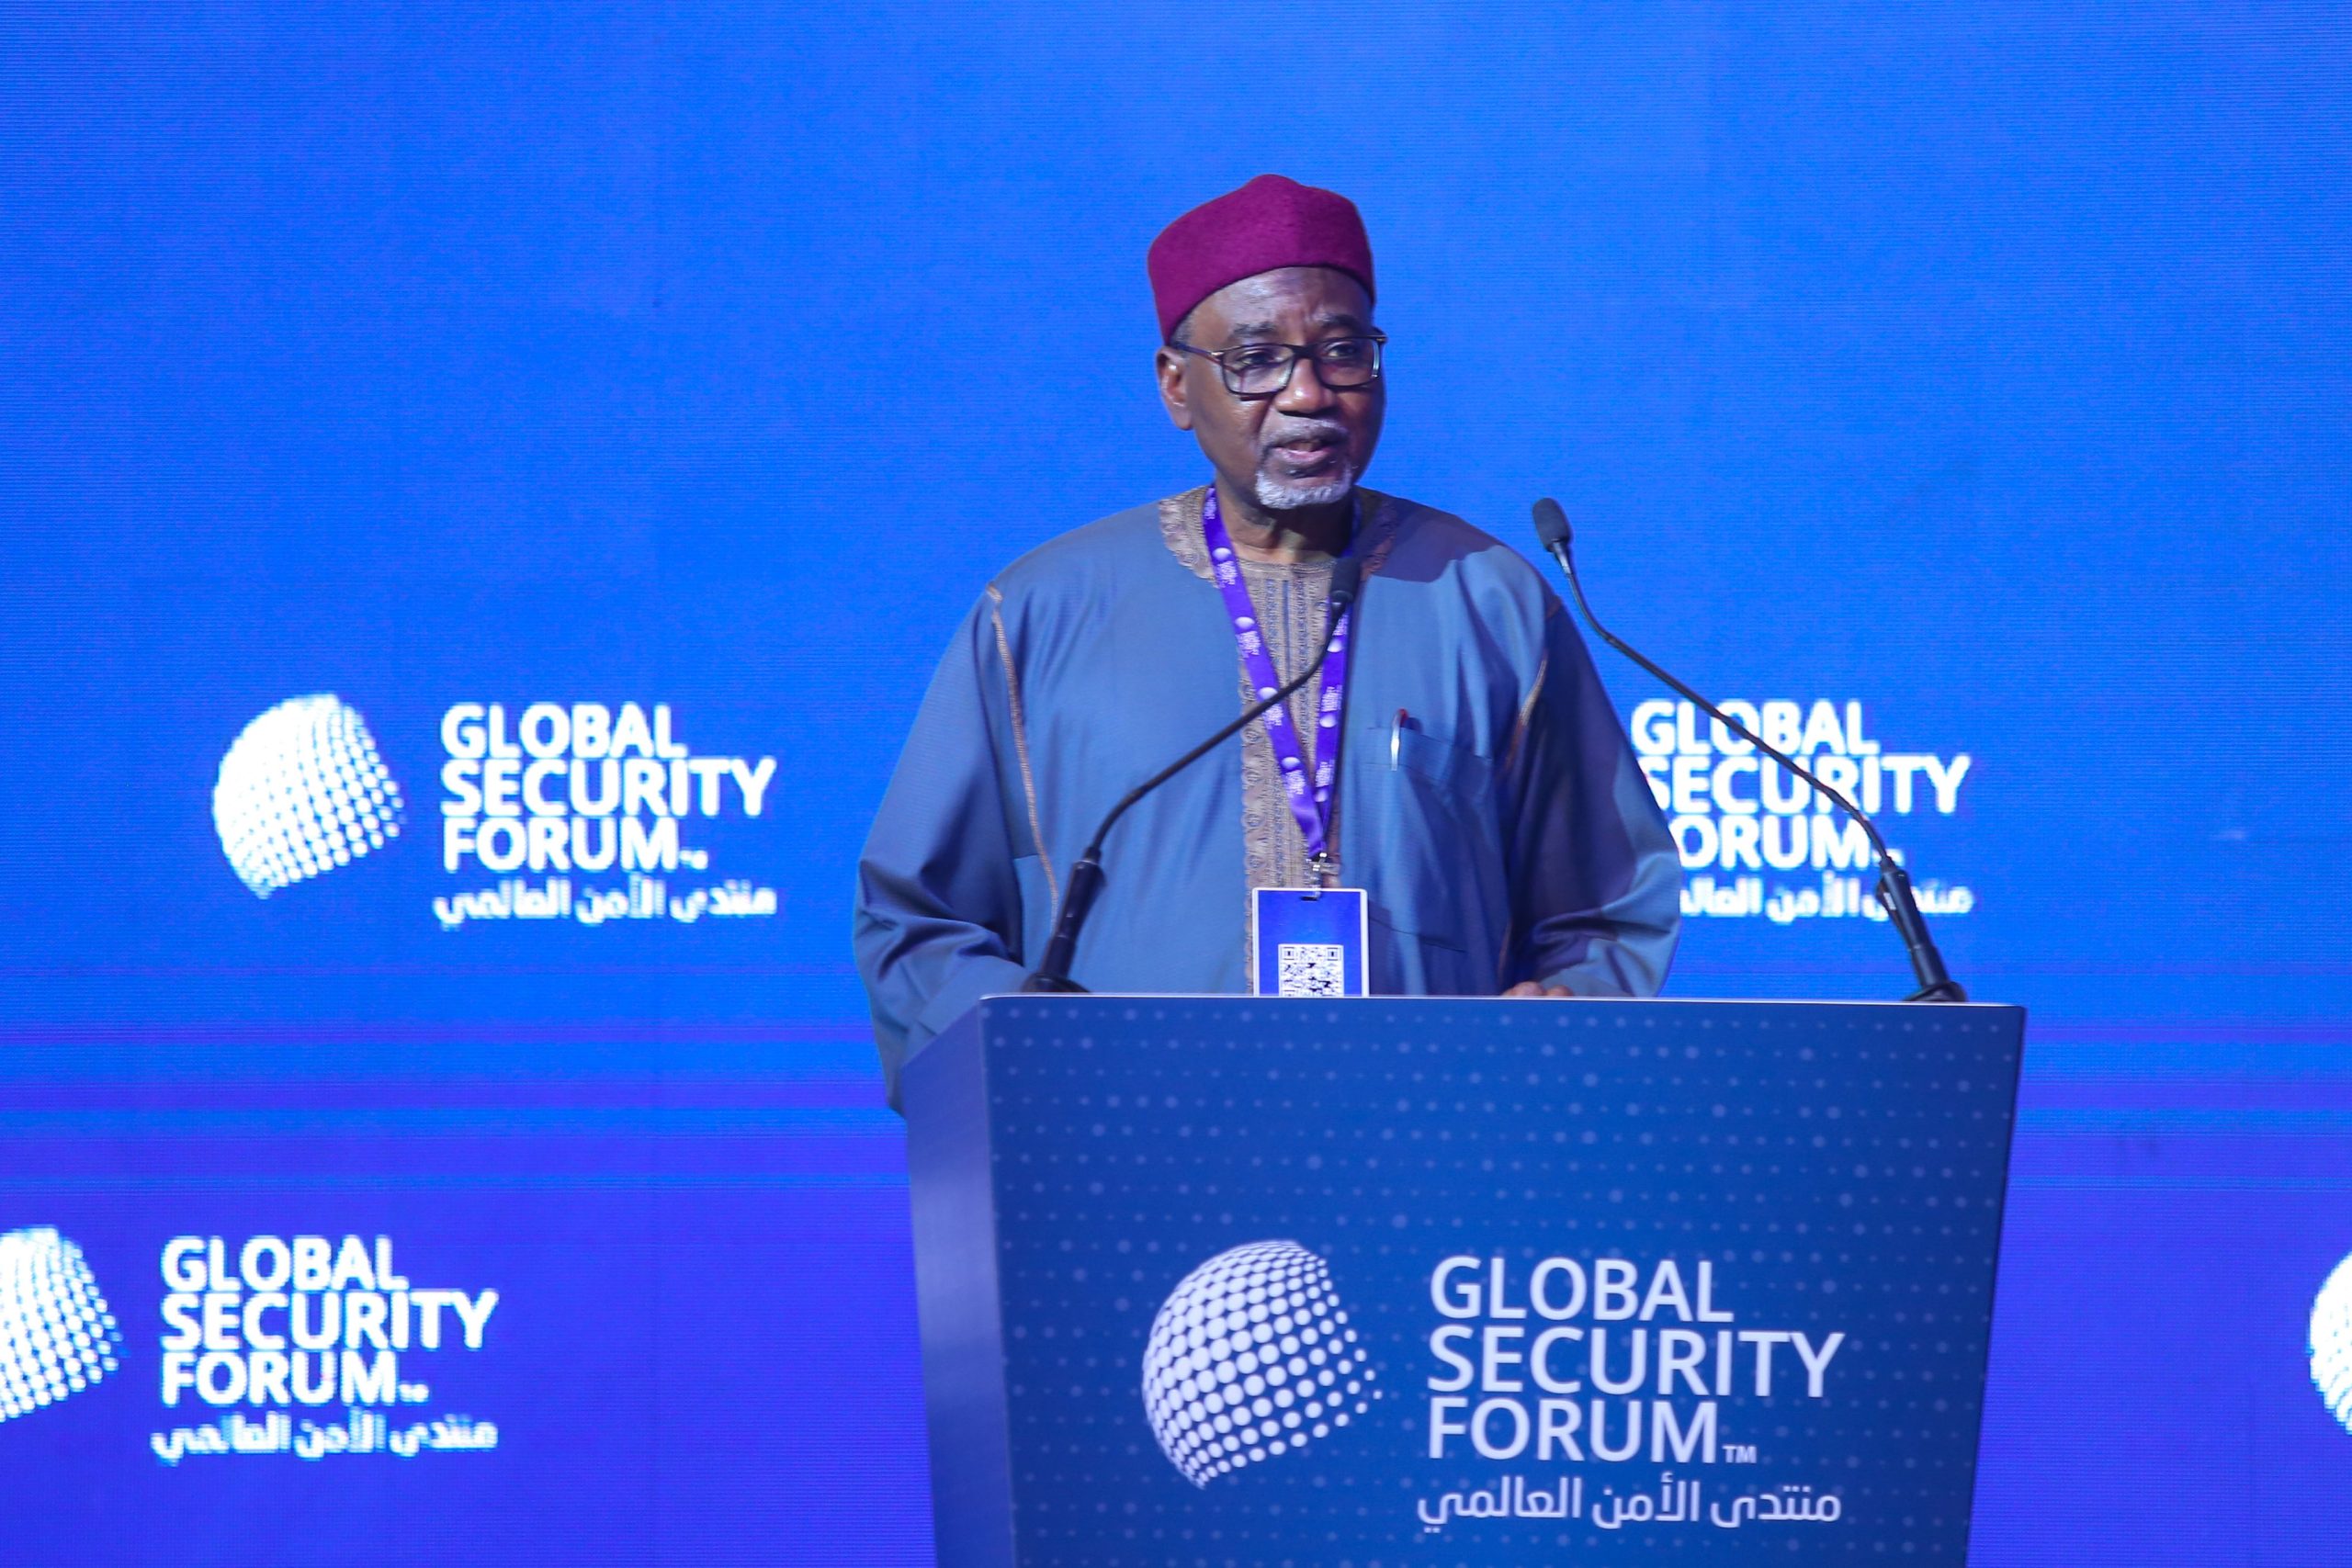 Nigerian intelligence chief lauds Qatar’s Global Security Forum and mediation efforts